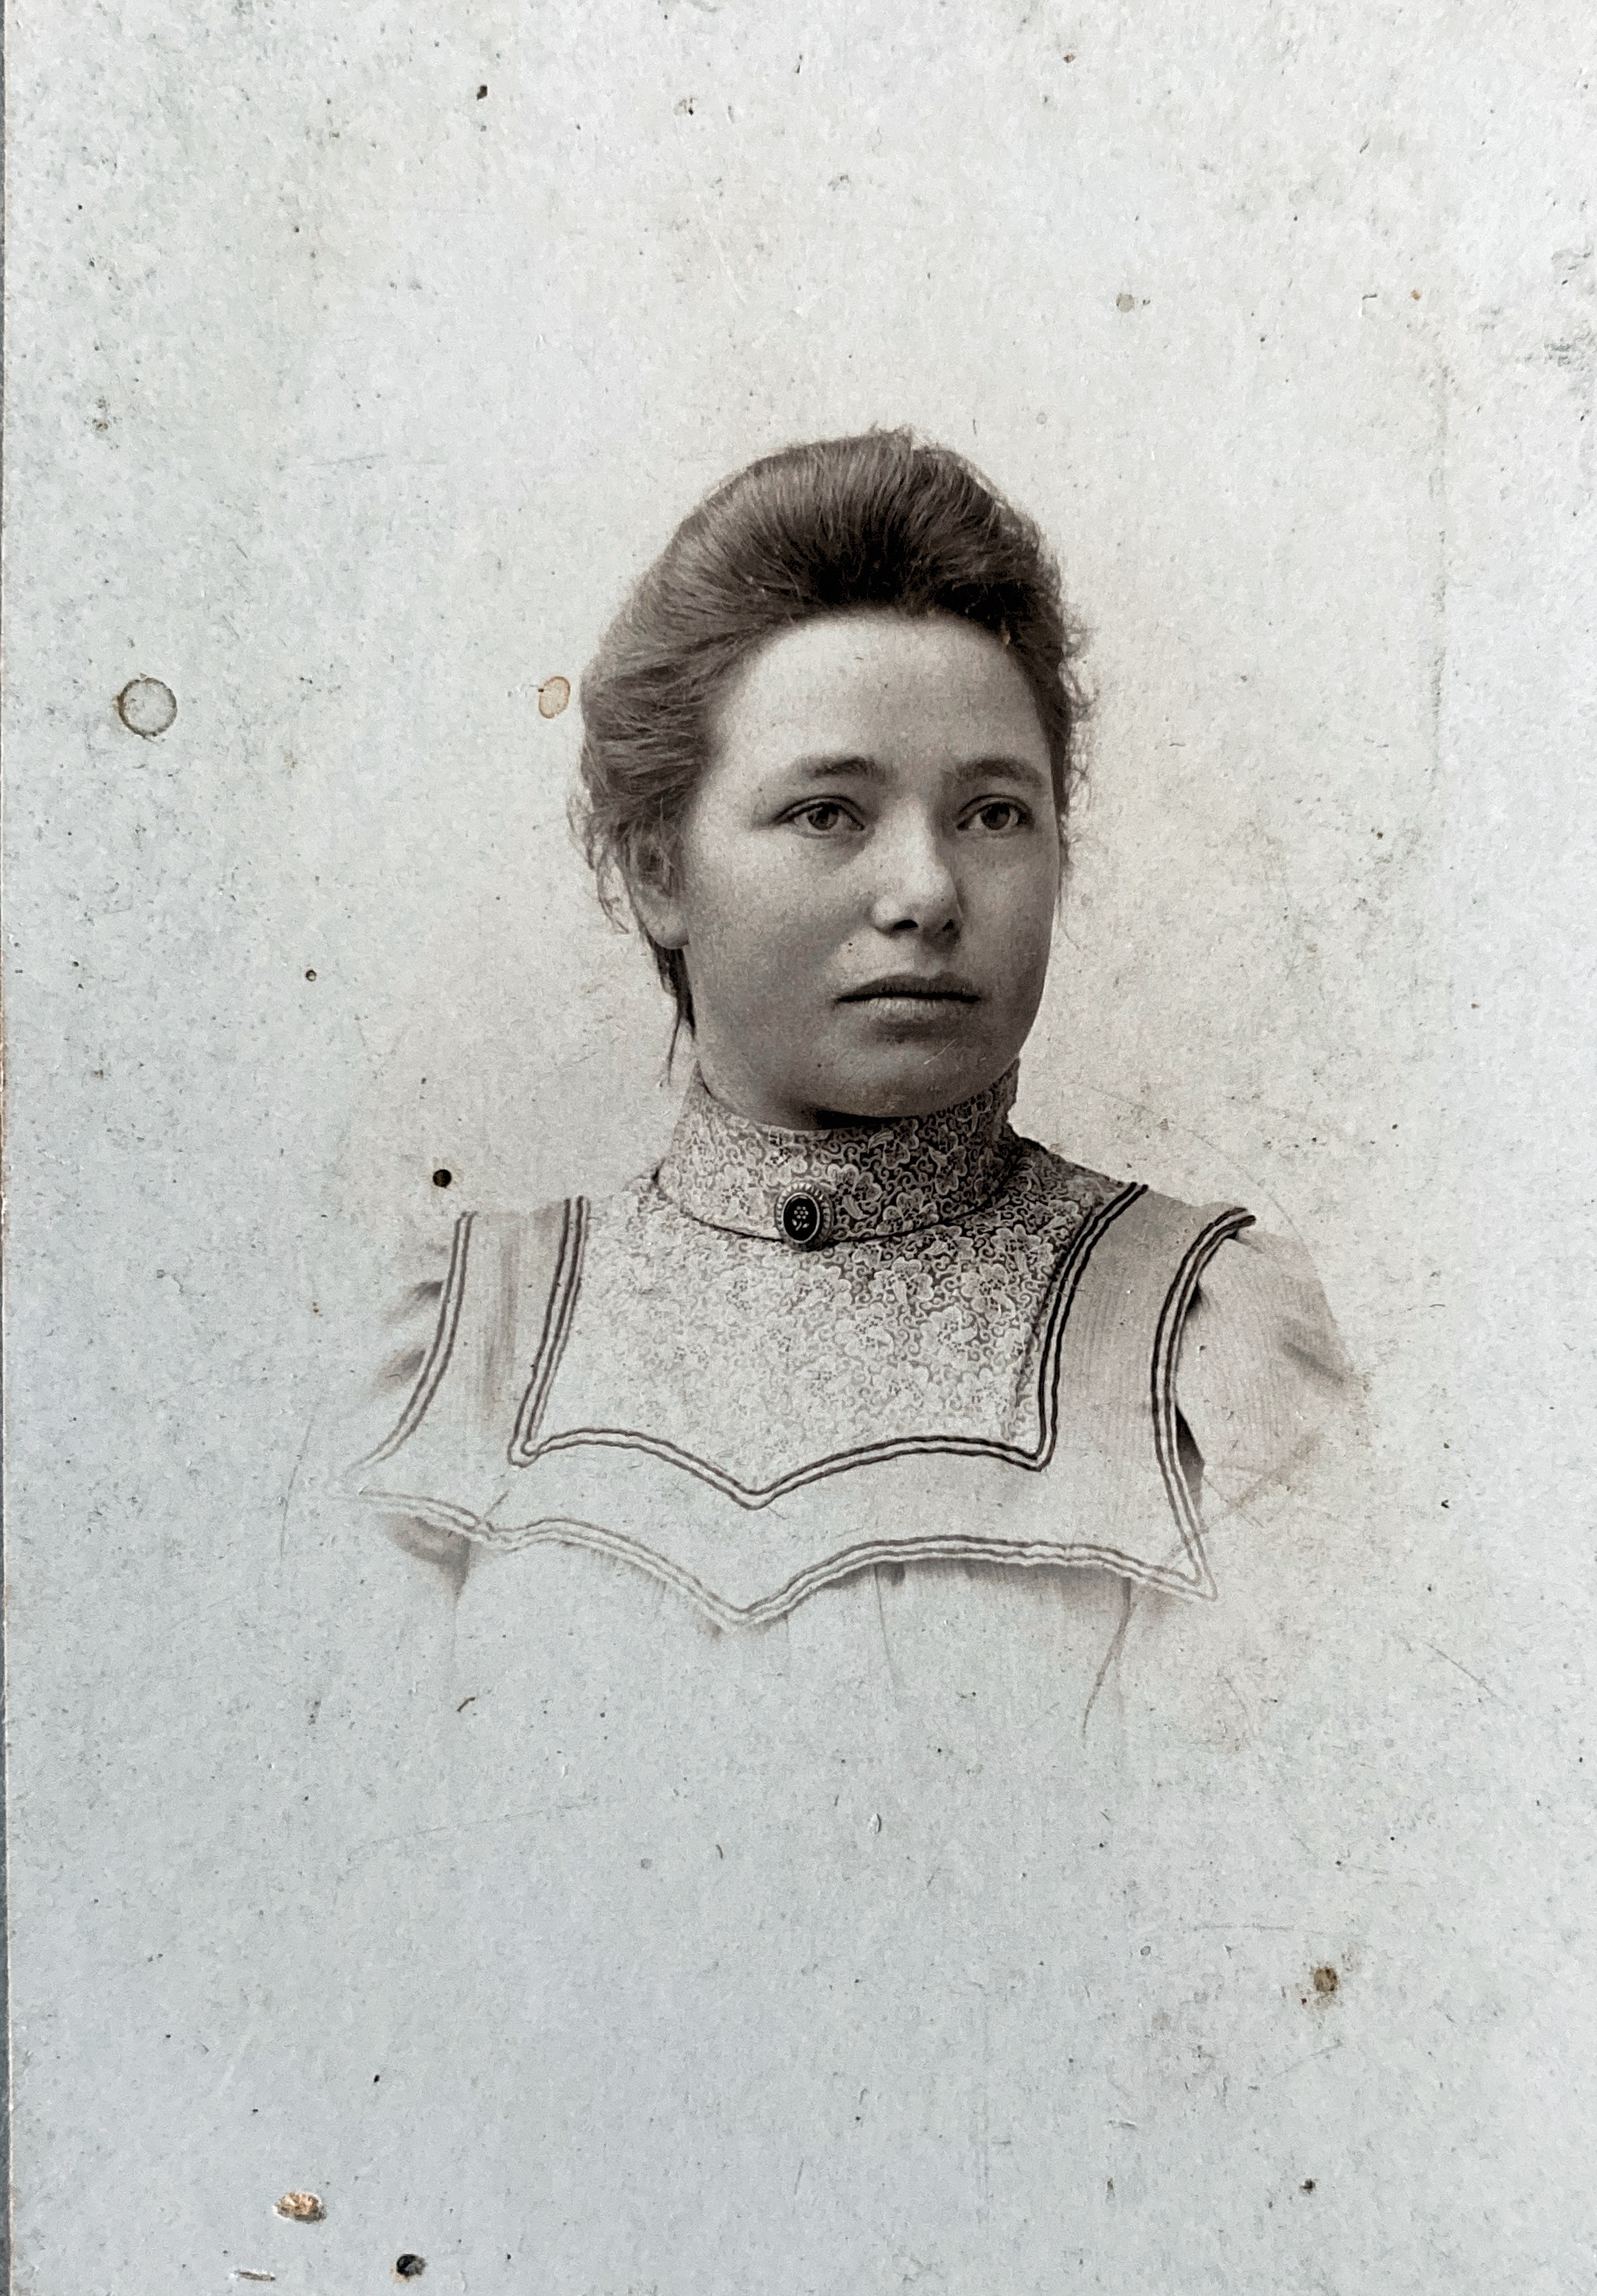 Reina Kamminga-Drenth
Ong. 1900